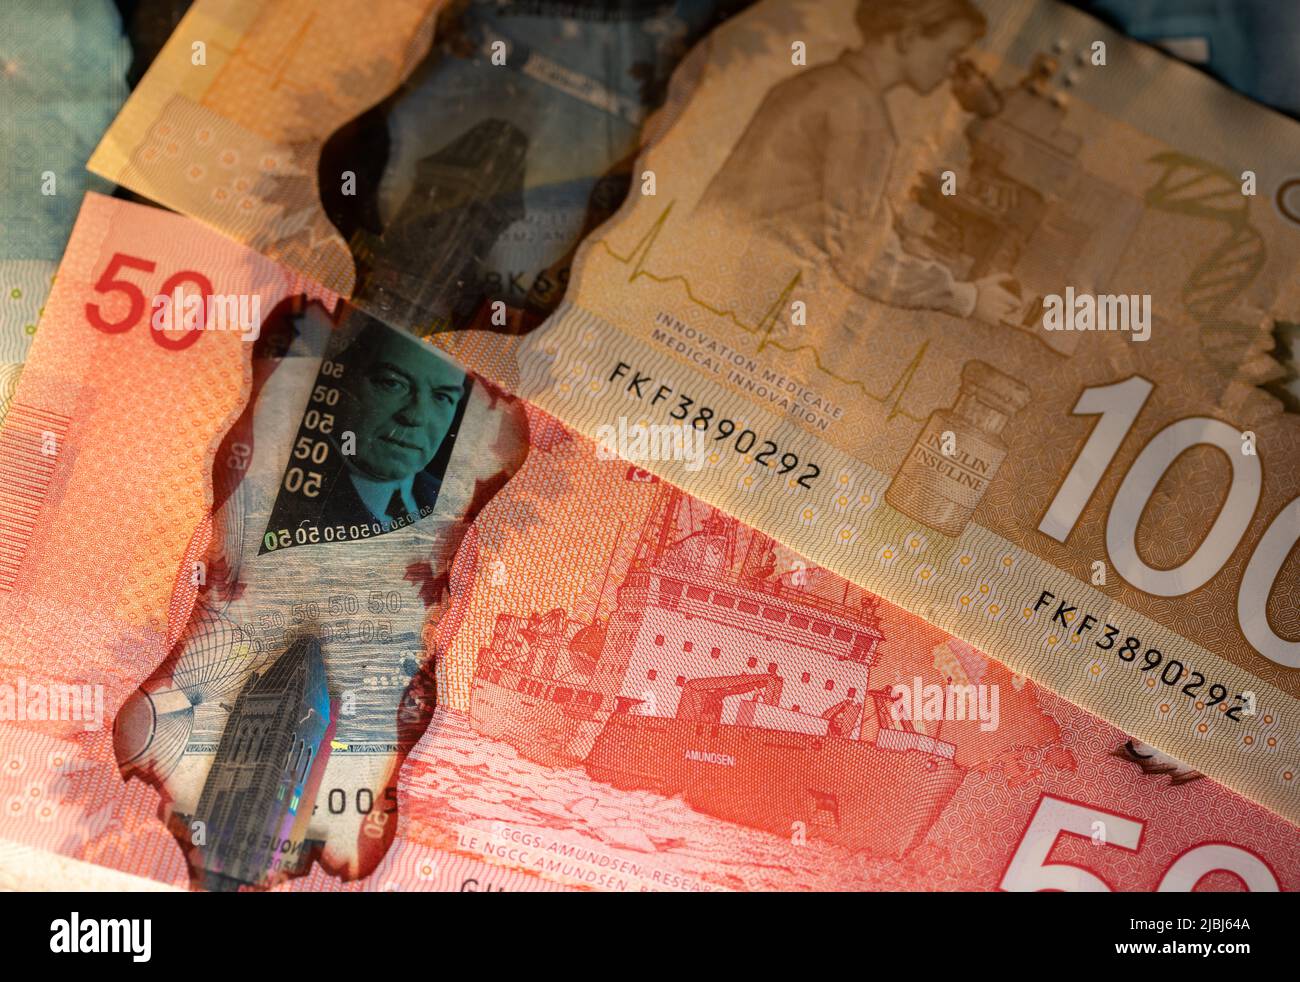 50 fifty canadian dollars Stock Photo - Alamy